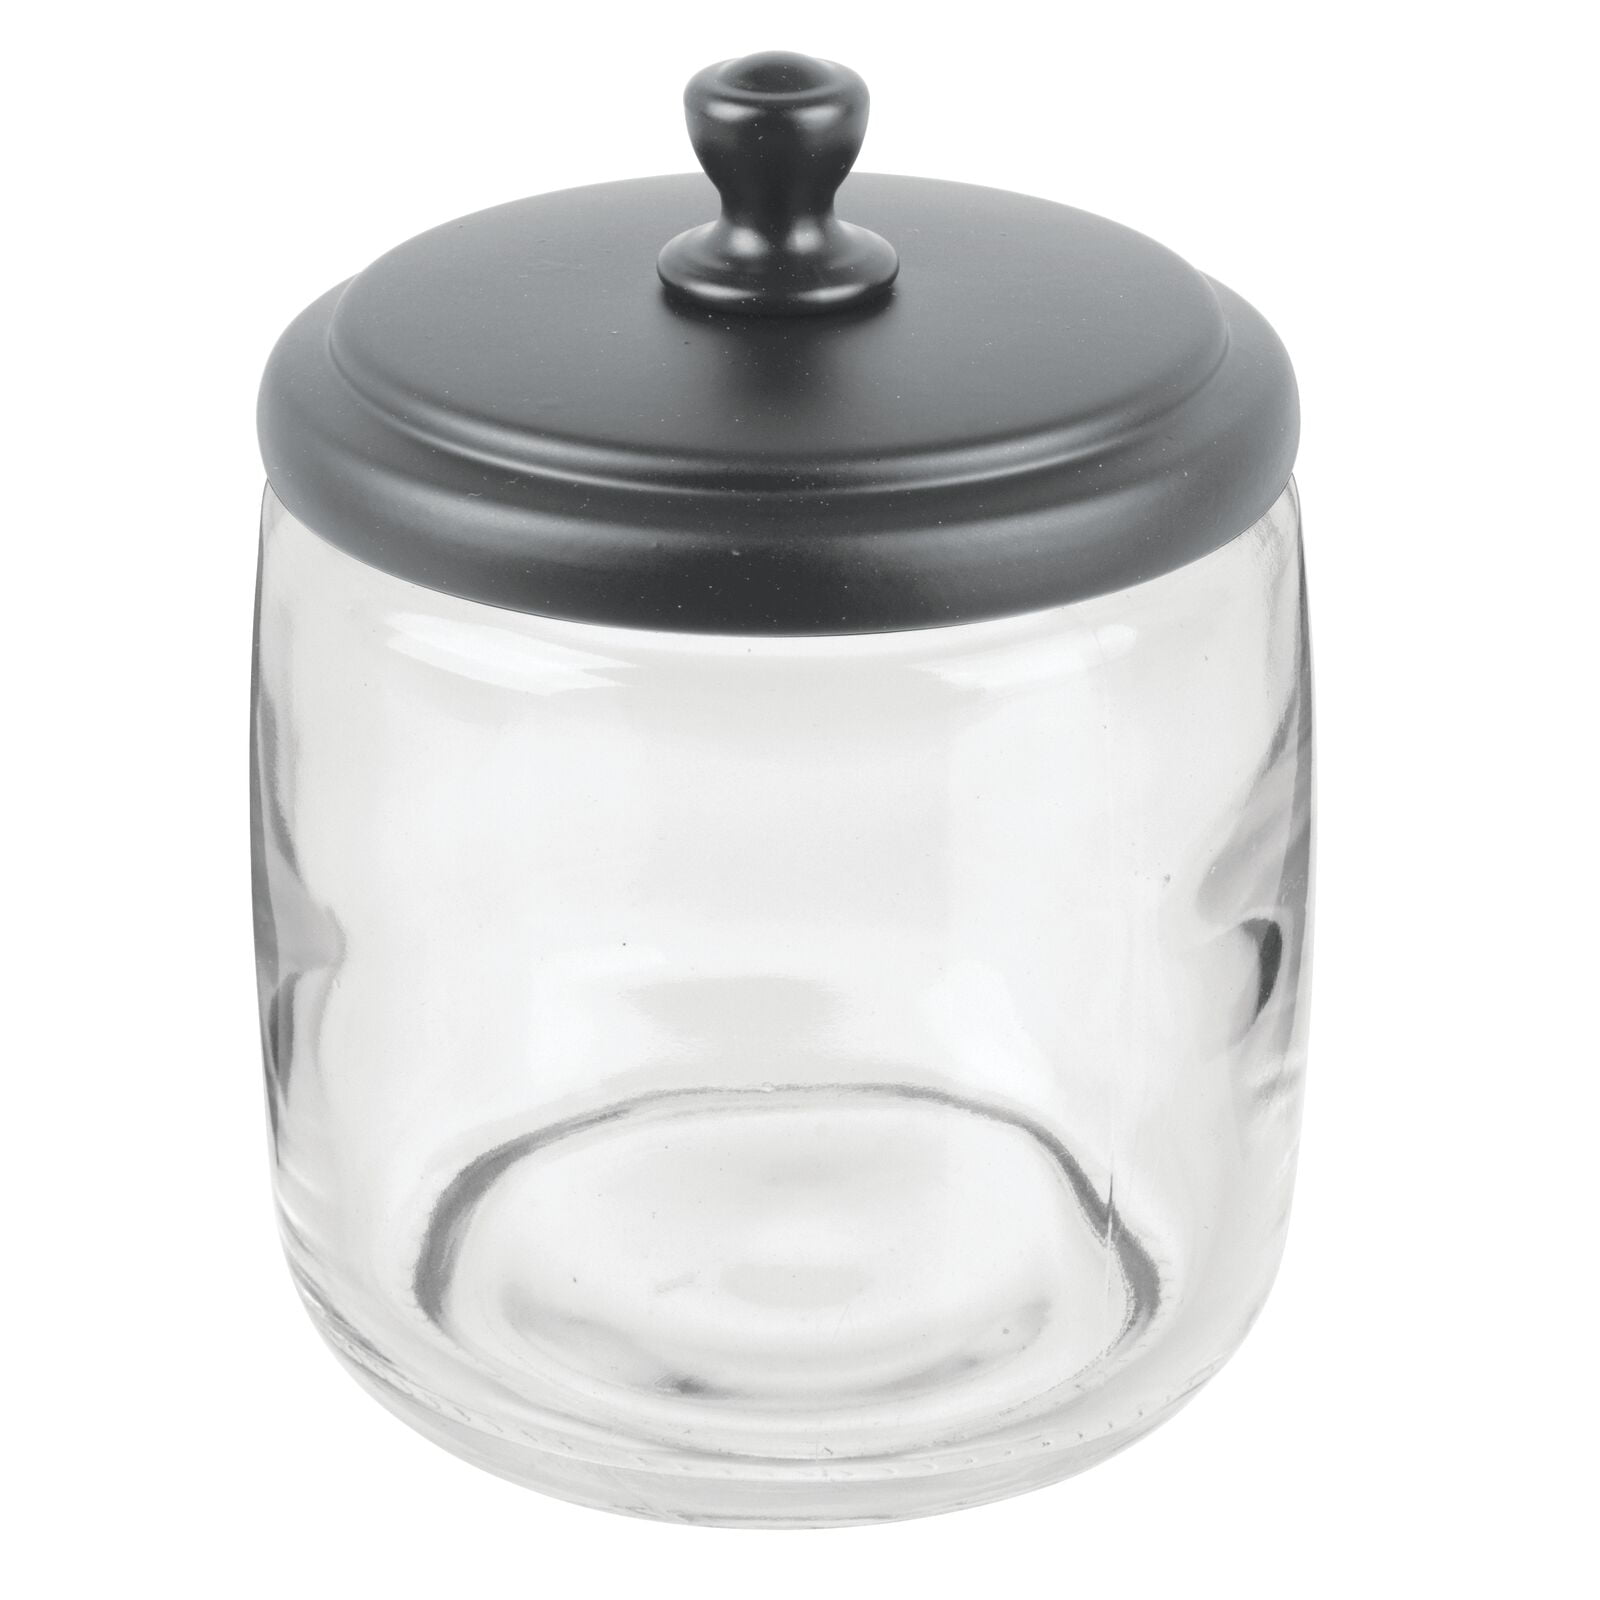 47th & Main Decorative Storage Glass Jar with Lid, Medium, Clear